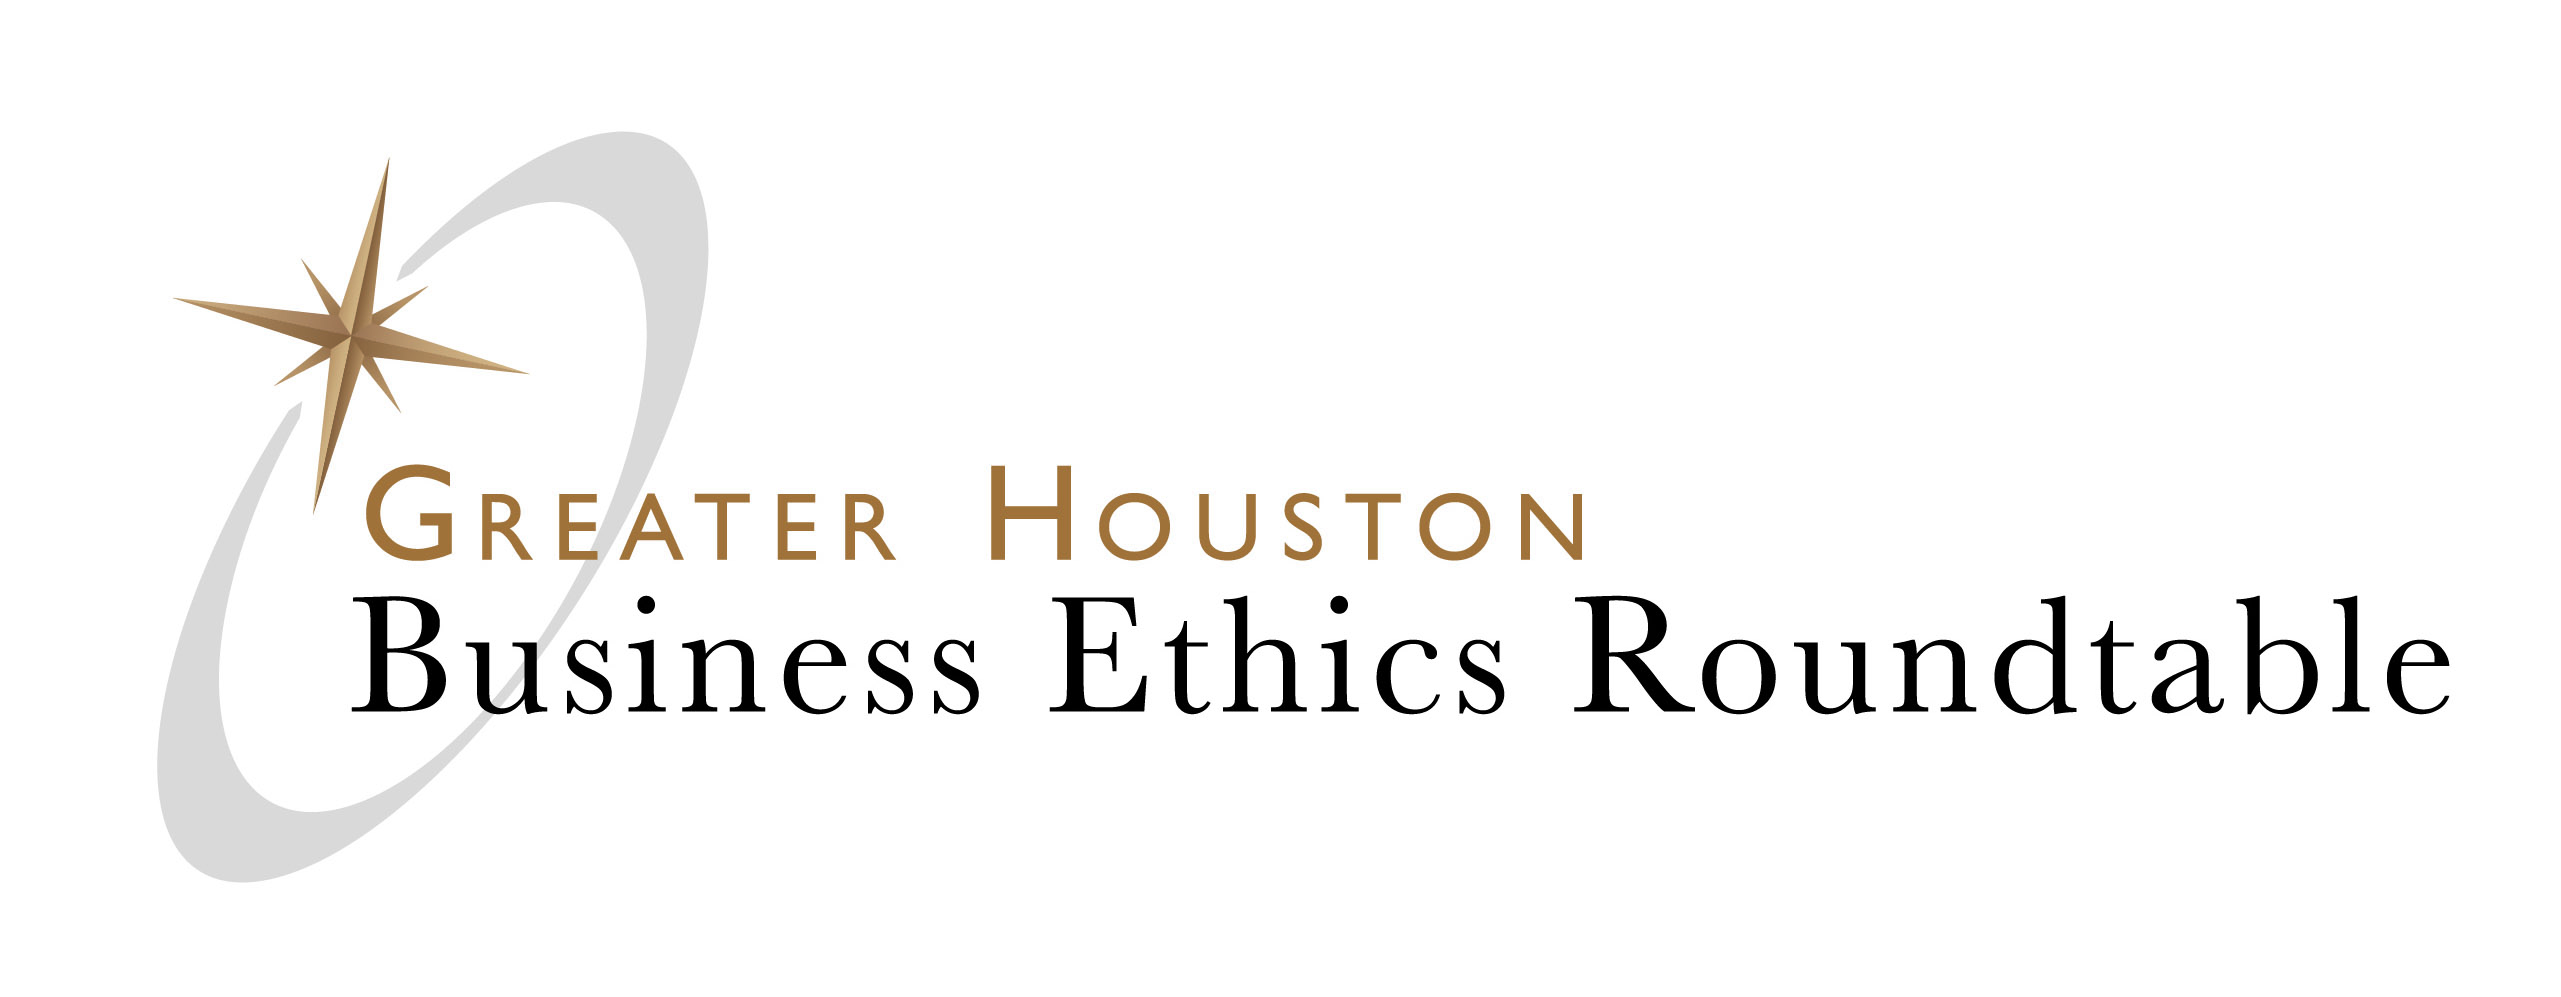 Greater Houston Business Ethics Roundtable